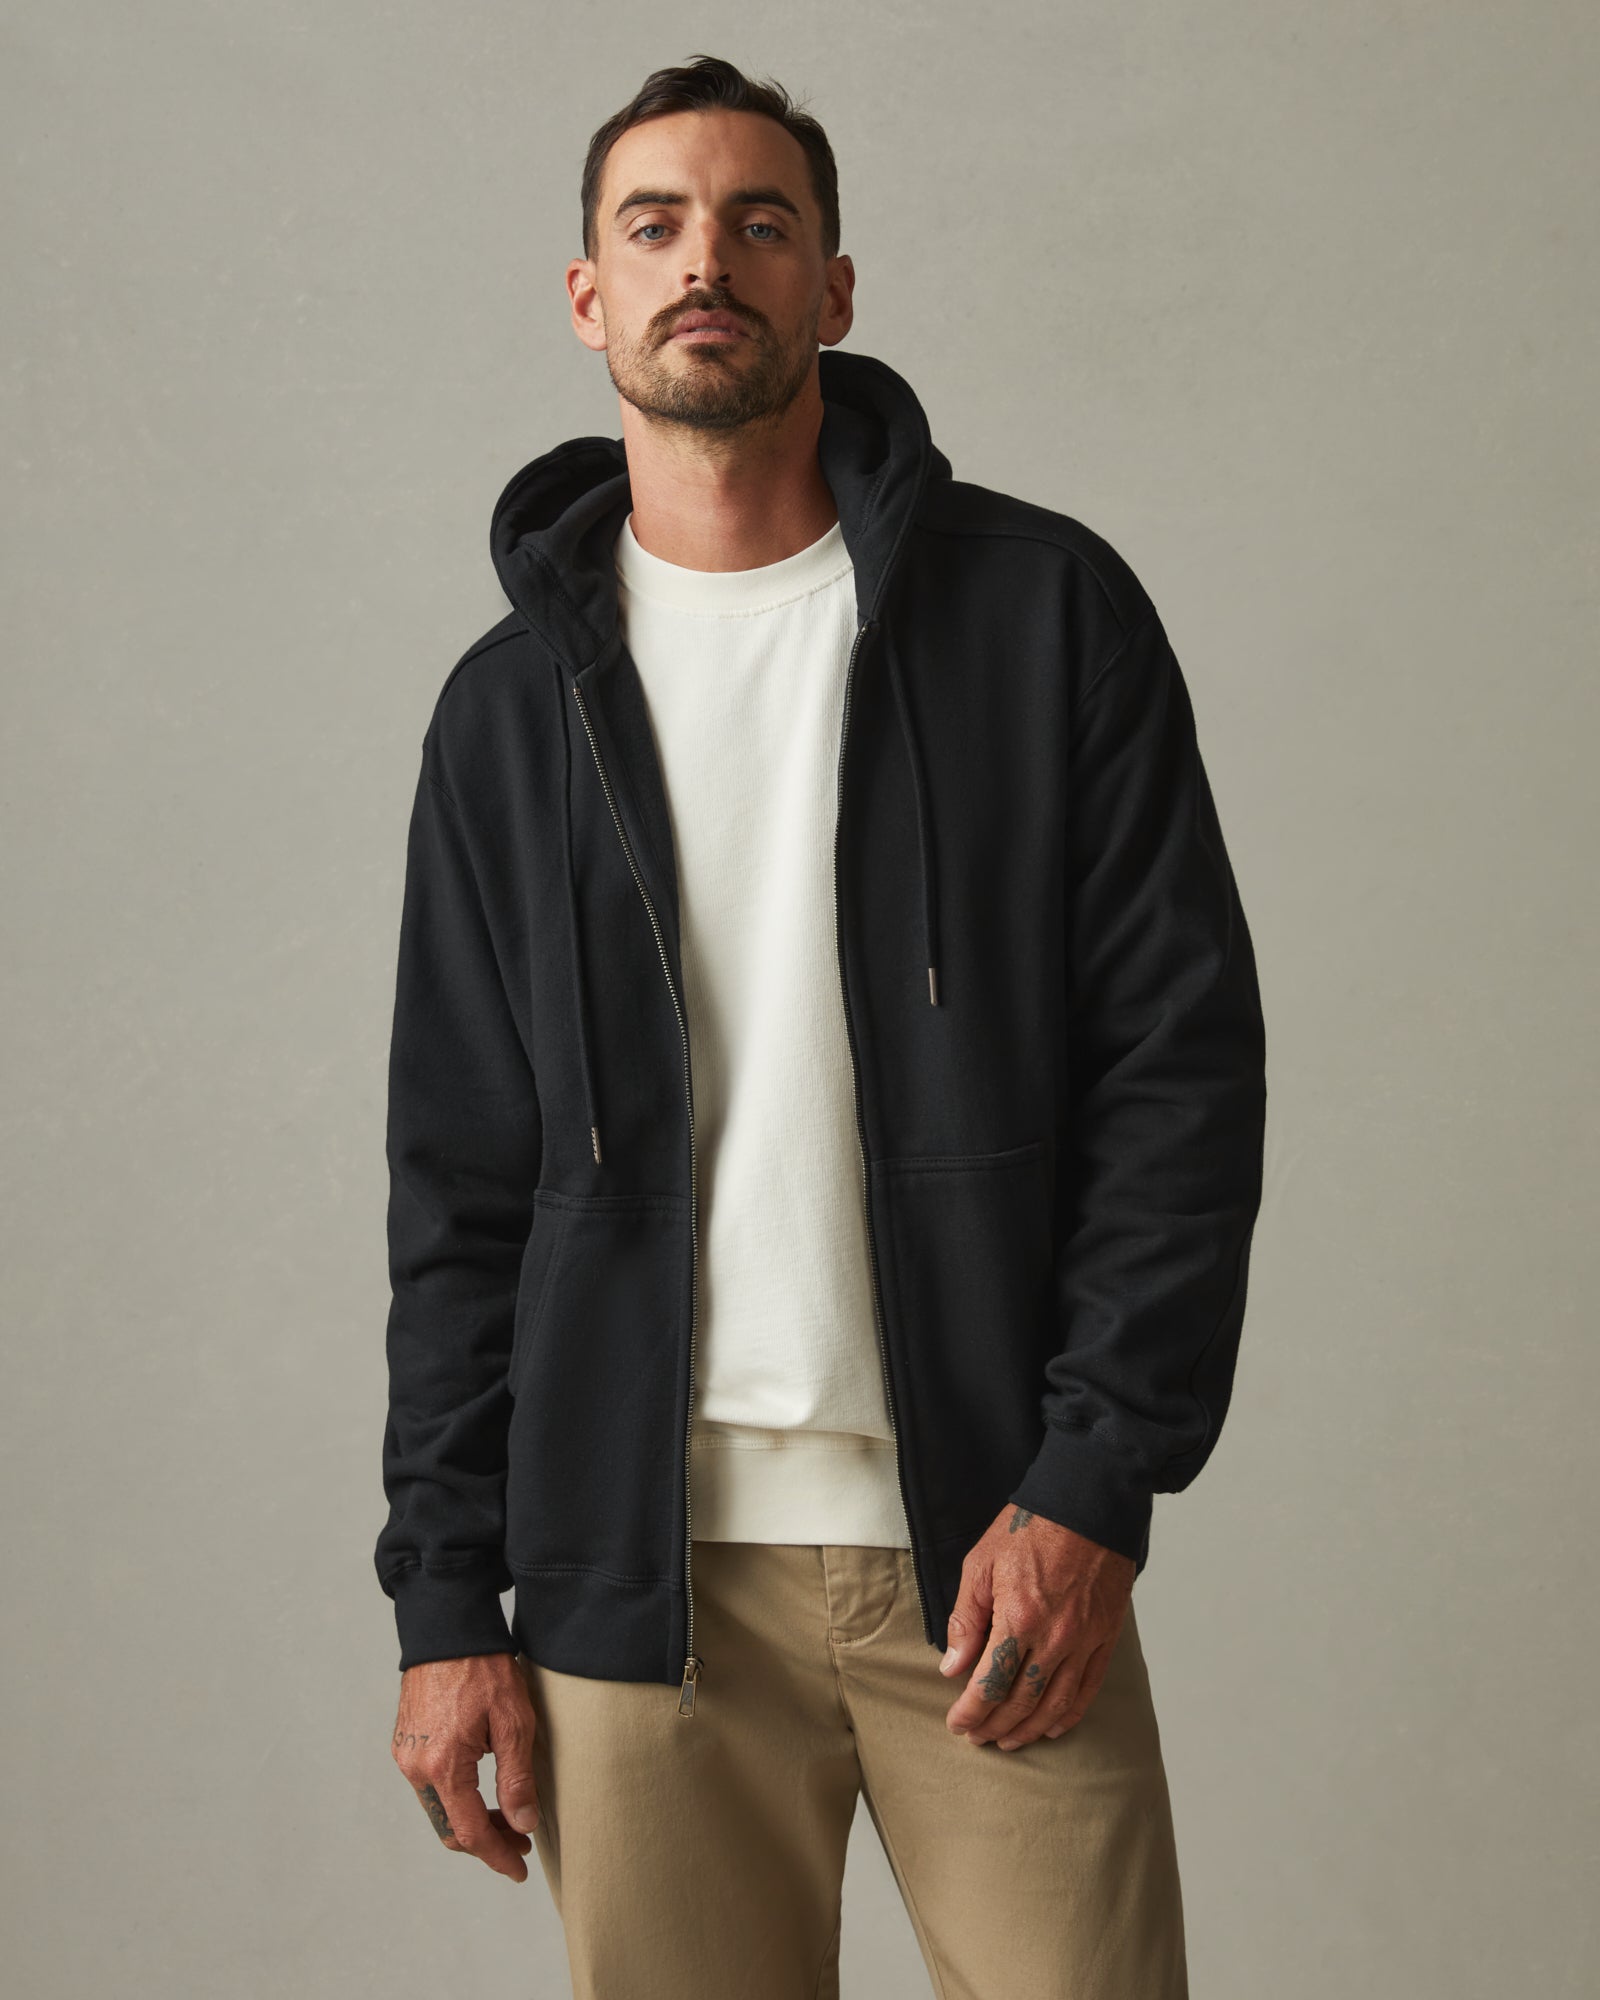 Men Multi Colors Hooded Sweatshirt Men Hoodies Color Black 5X-Large Size